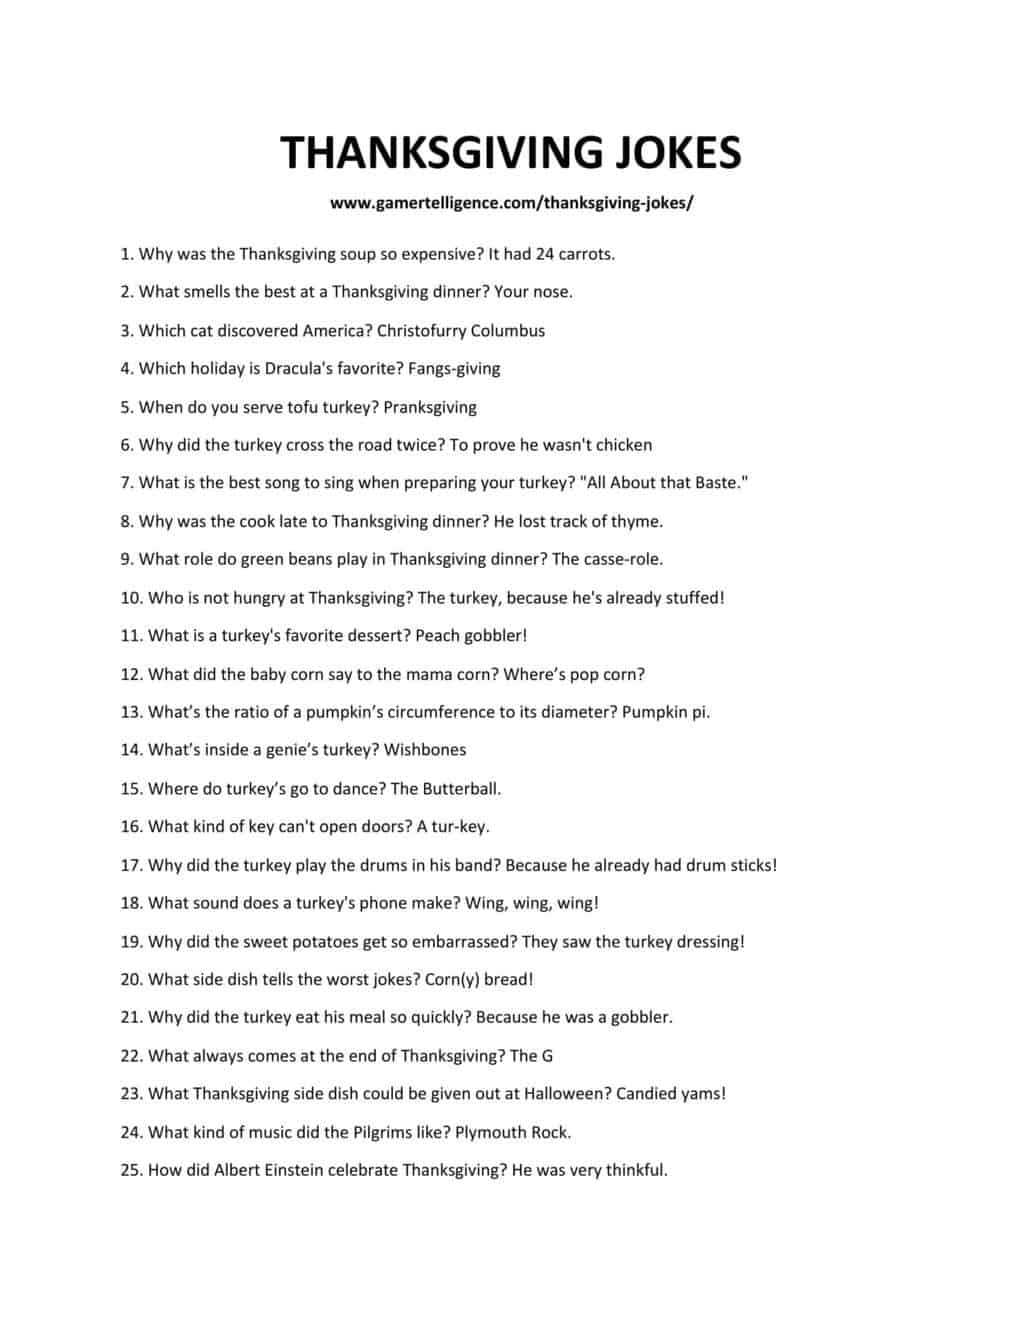 Downloadable list of jokes